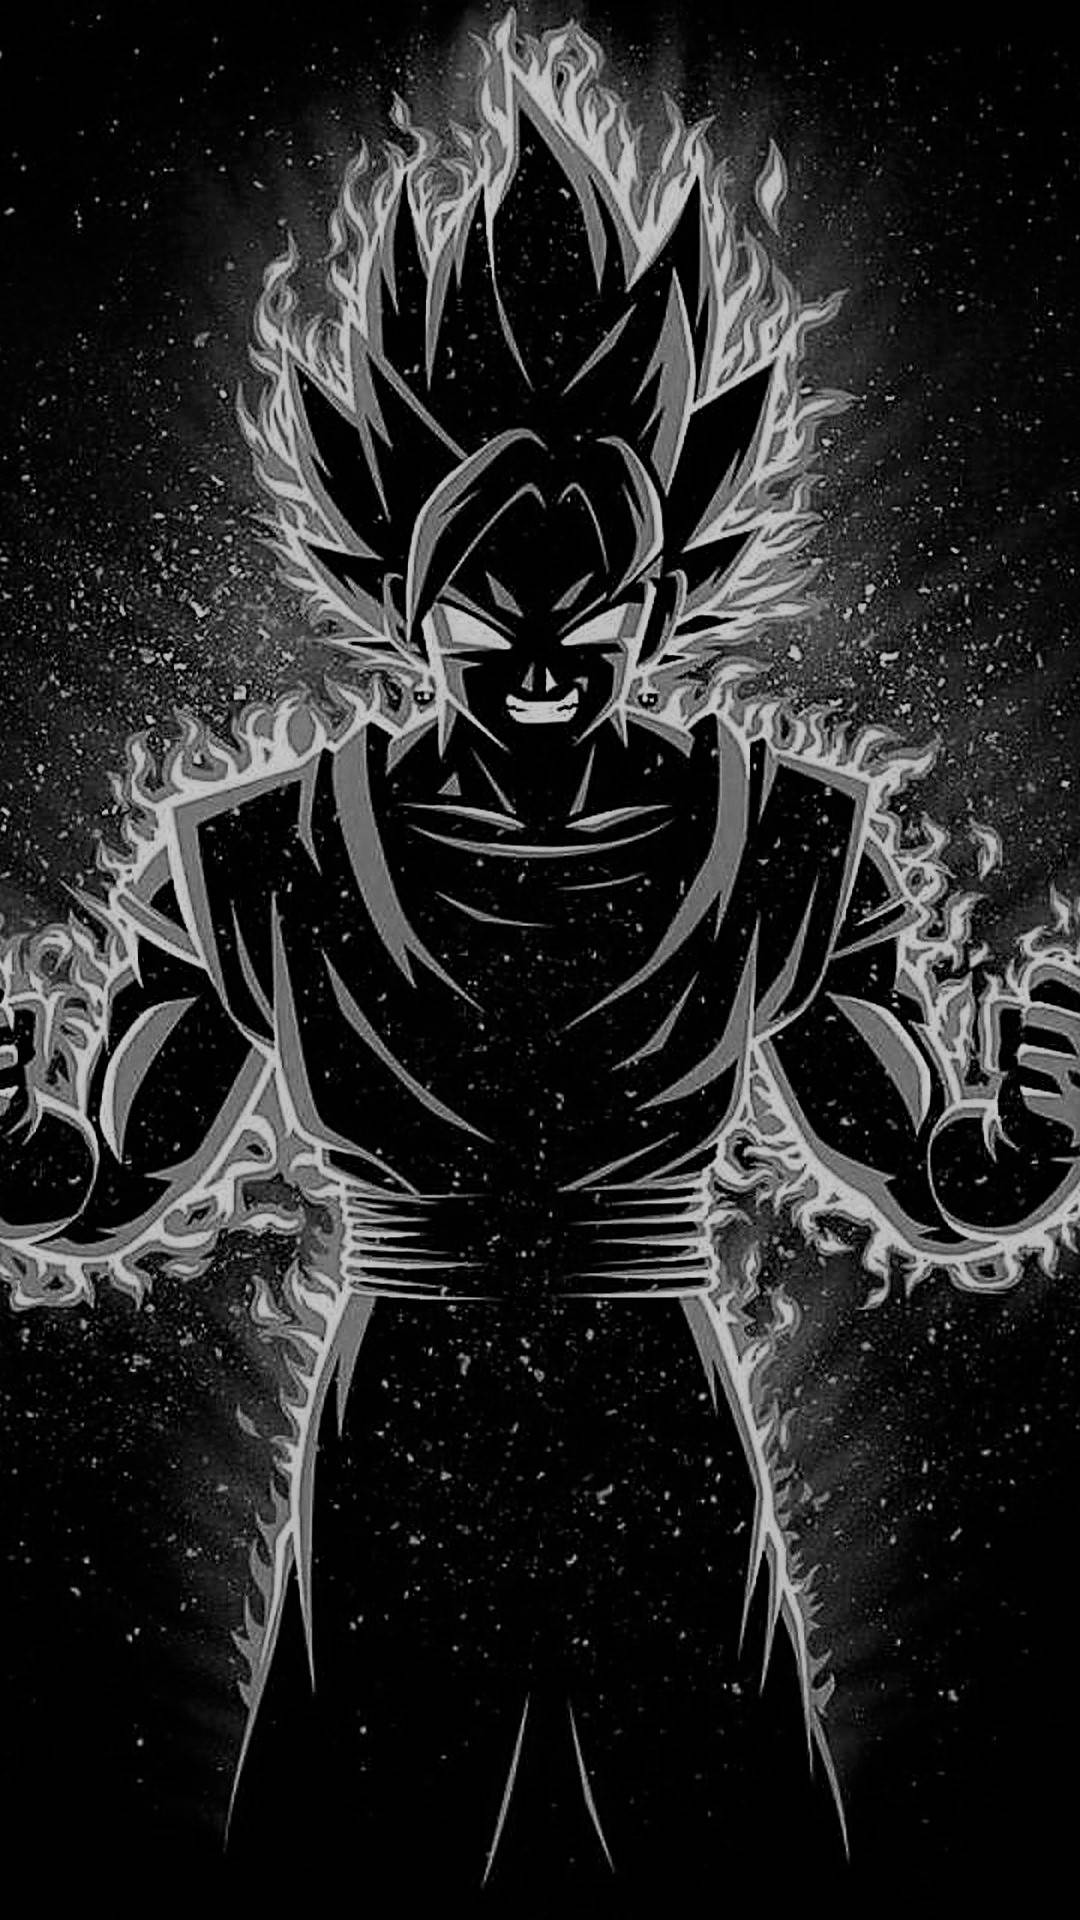 Raging Goku Black And White Wallpaper